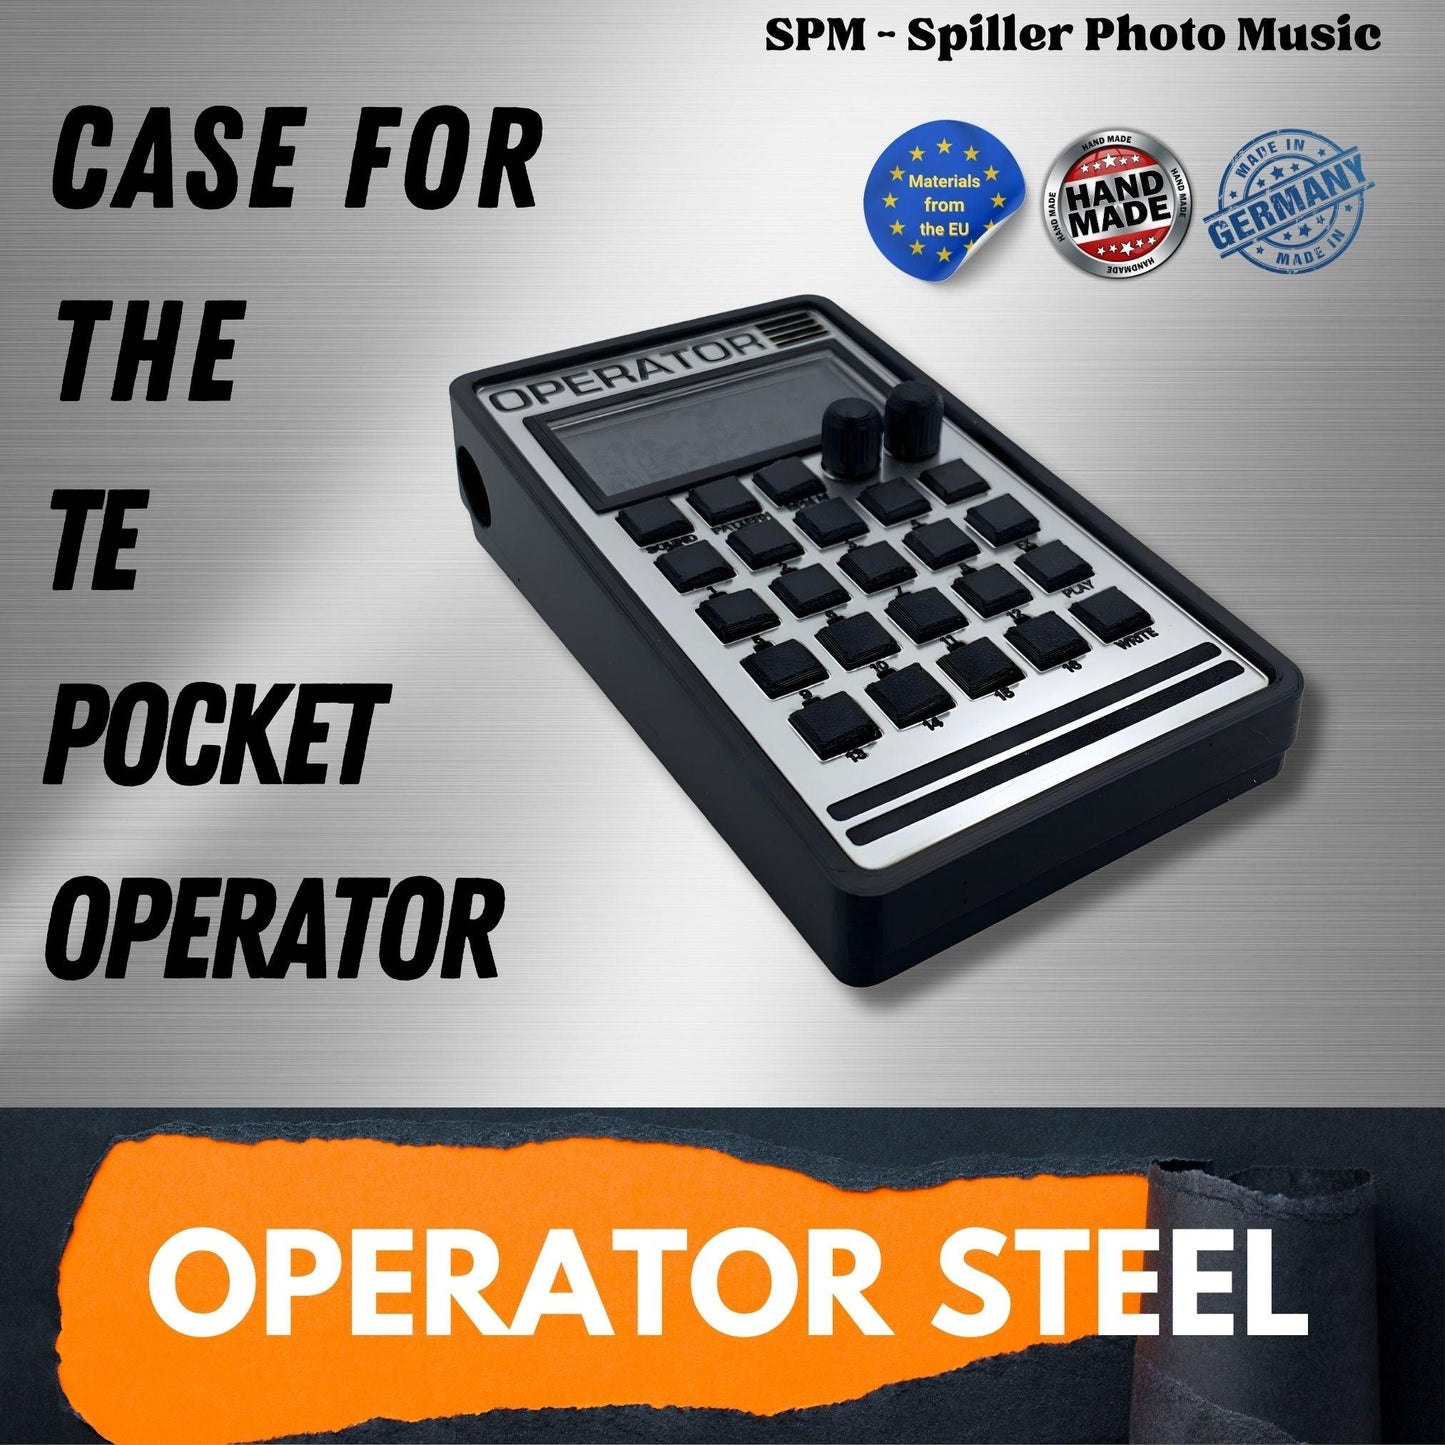 OPERATOR Gehäuse STEEL - 3D gedrucktes Gehäuse für Teenage Engineering Pocket Operator - SPM - Spillerphoto & Music